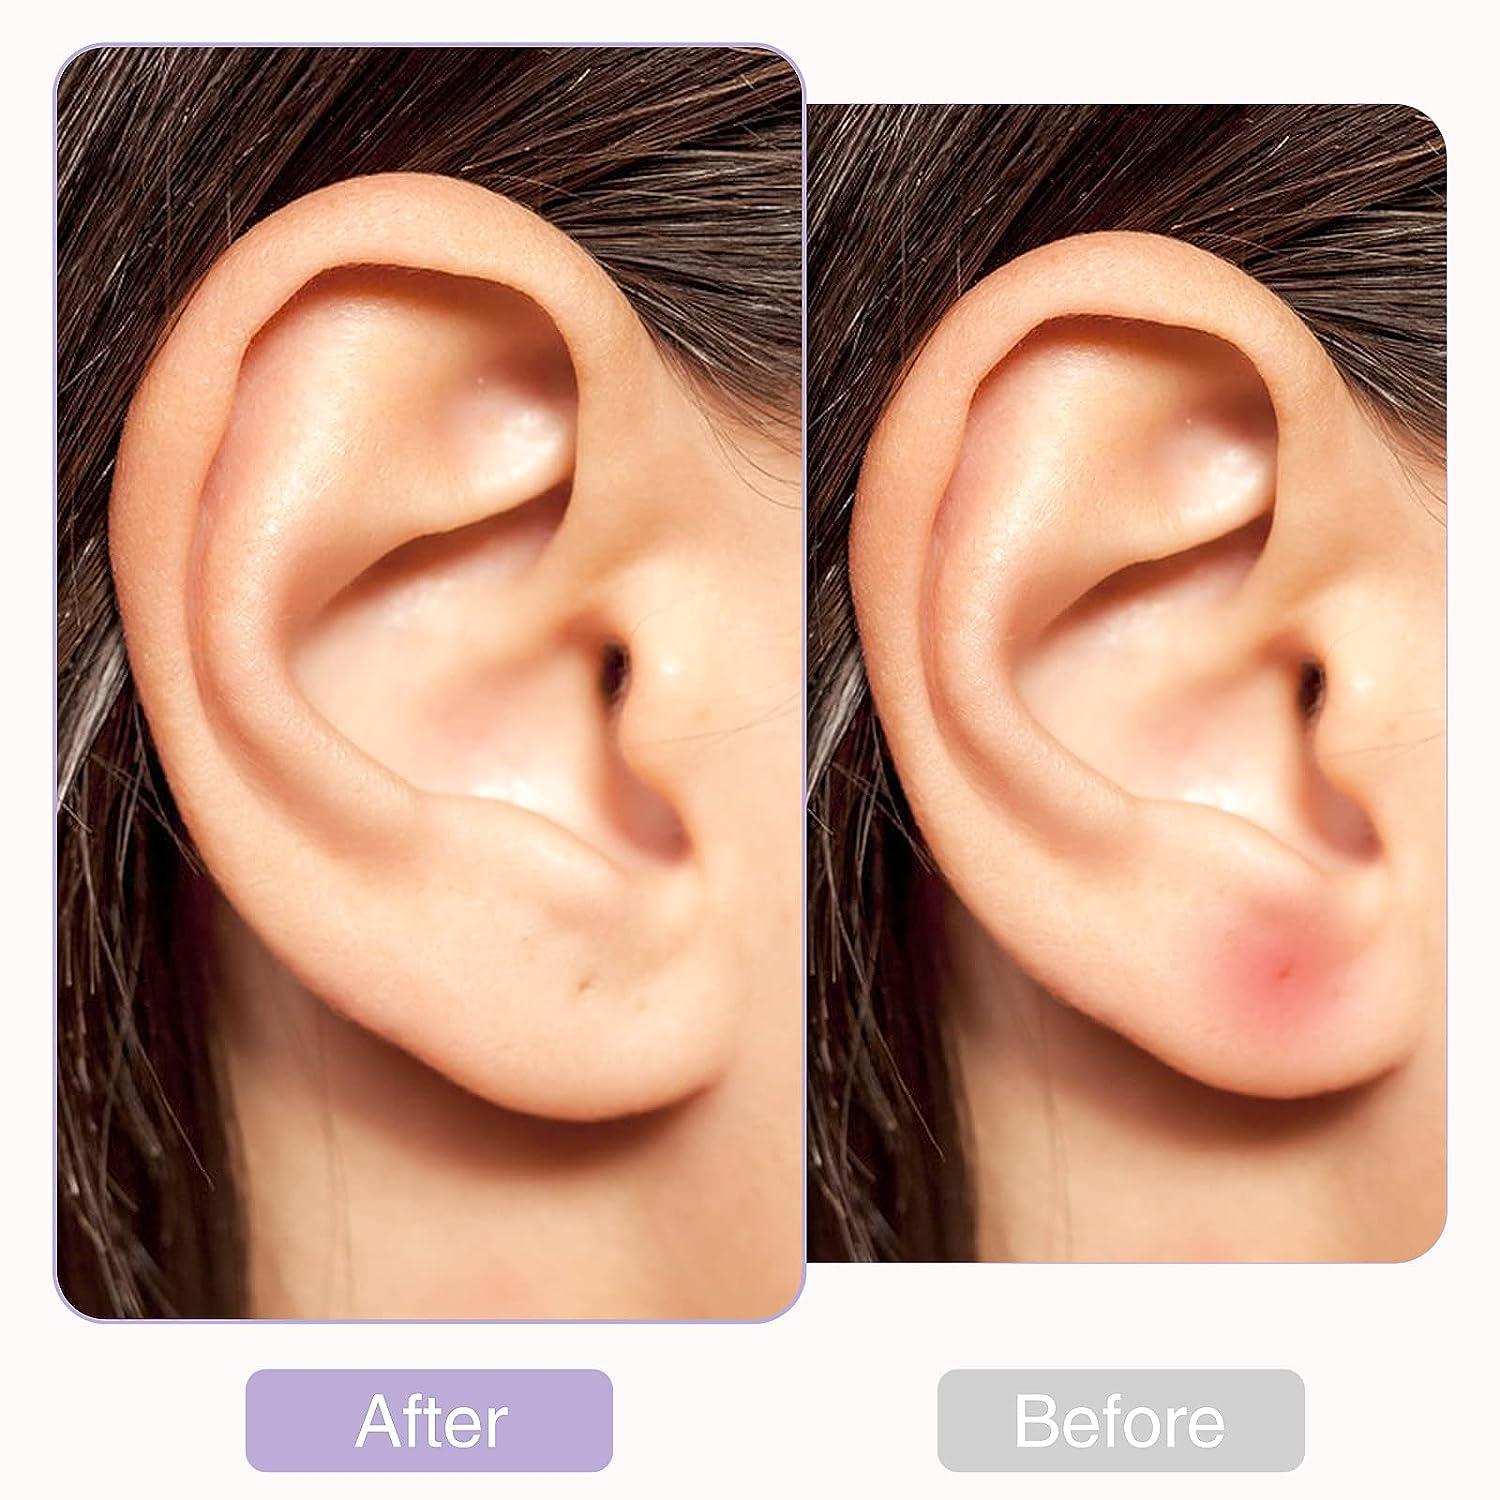 360PCS Ear Hole Floss Earrings Odor Removal Ear Care Kit